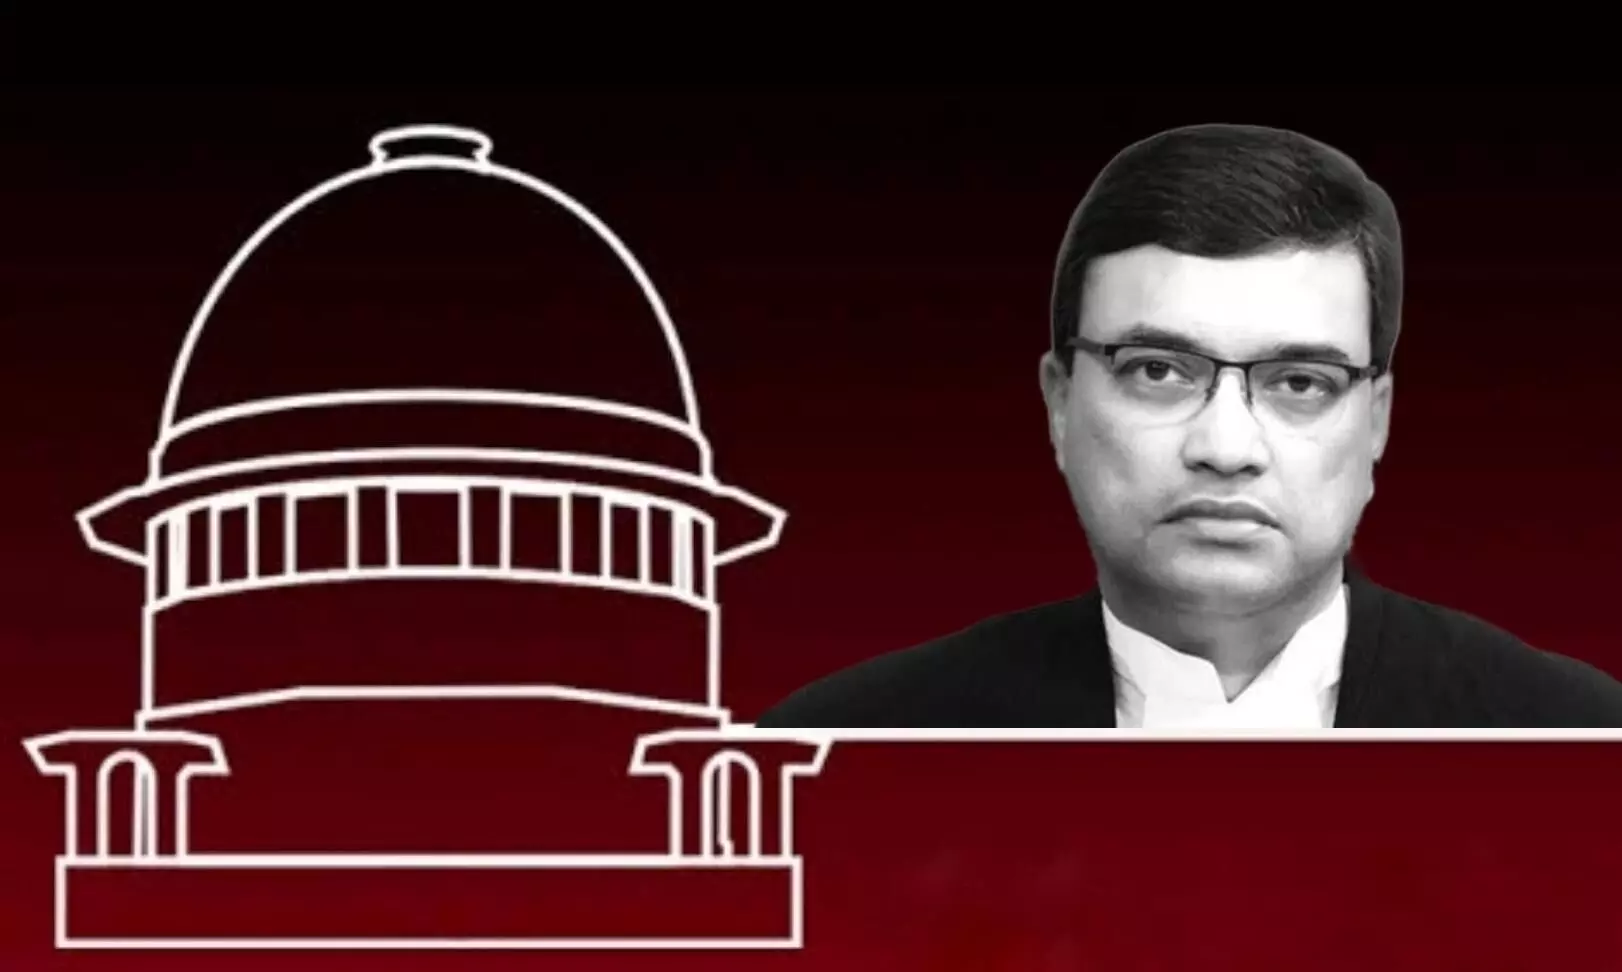 Justice Dipankar Datta warns against efforts to undermine Indias progress, defends use of VVPAT